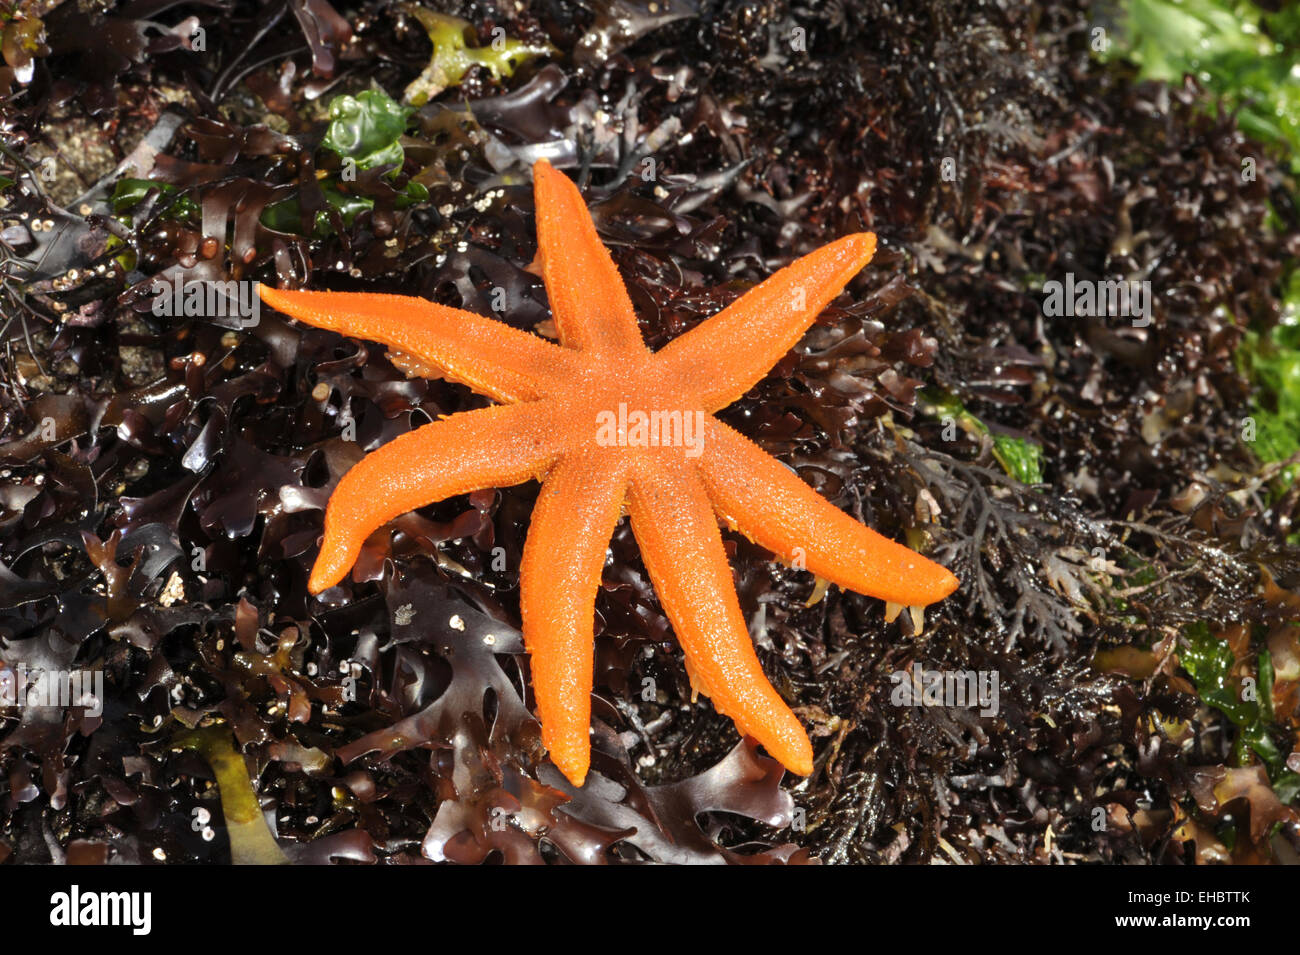 Sieben bewaffnete Starfish - Luidia ciliaris Stockfoto